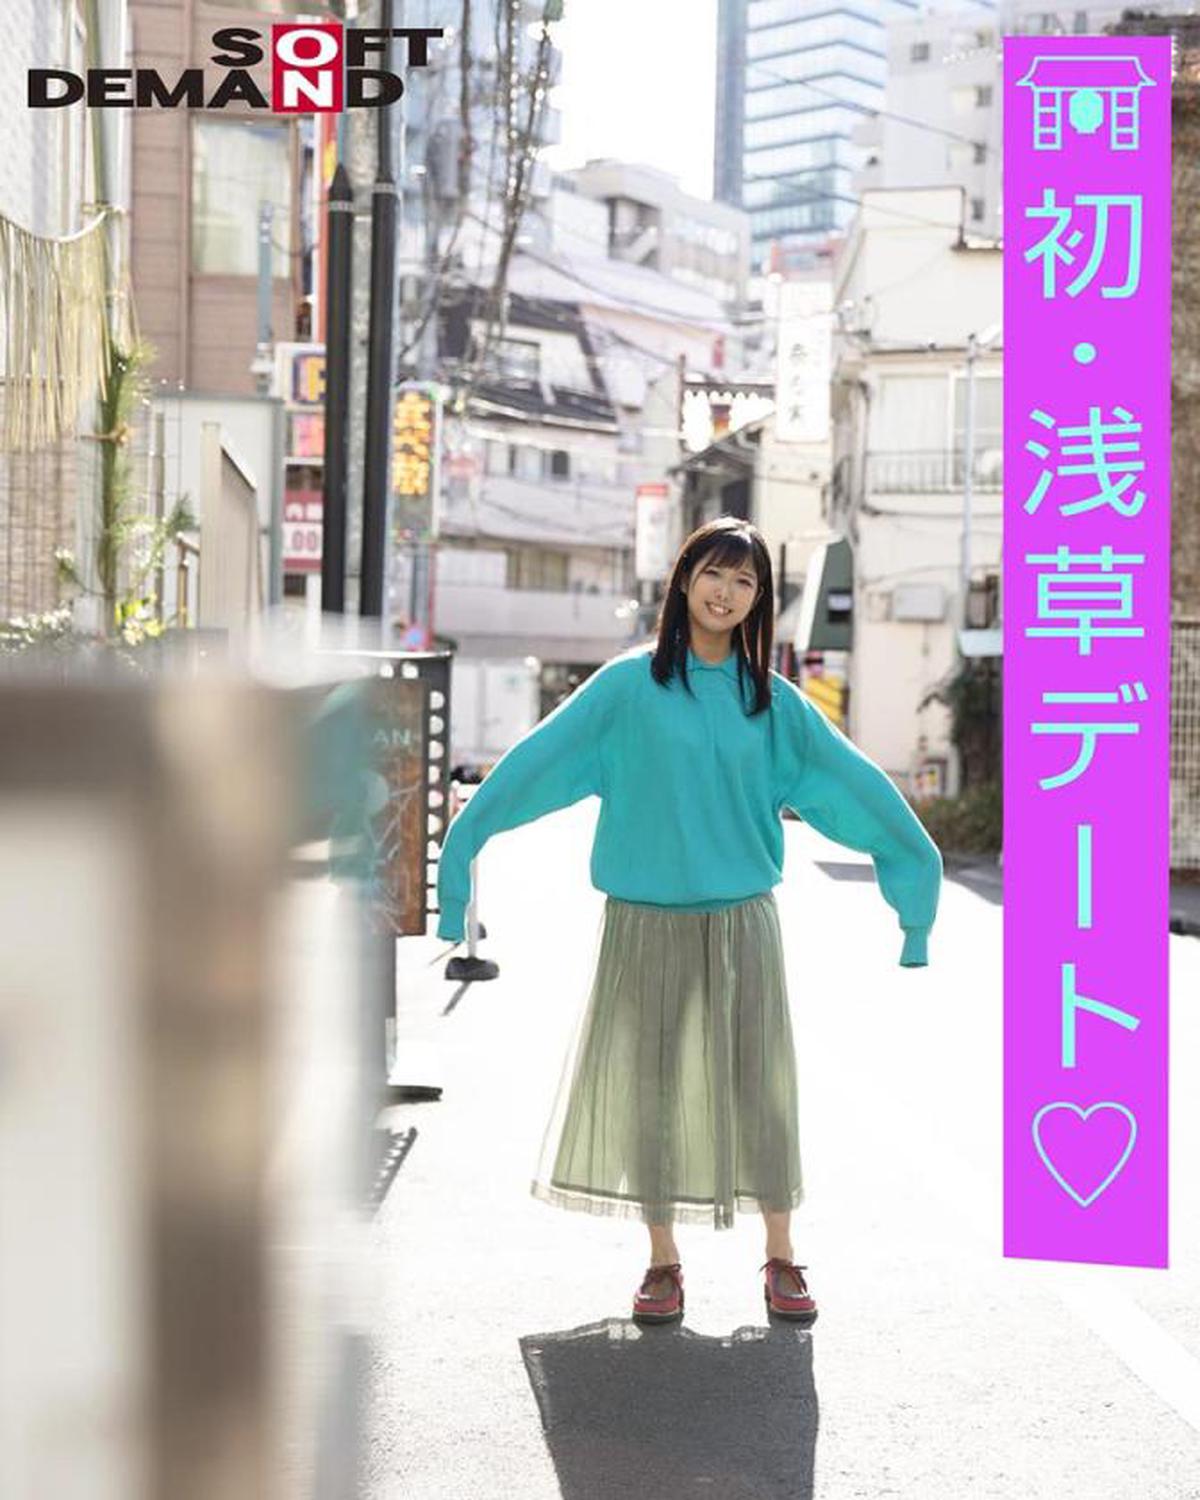 107EMOI-002 Emo Girl / Erstes Asakusa-Date / Tipsy Gonzo / Emi Suzukaze (23) / Alleinleben in Kansai / Lieblingsposition